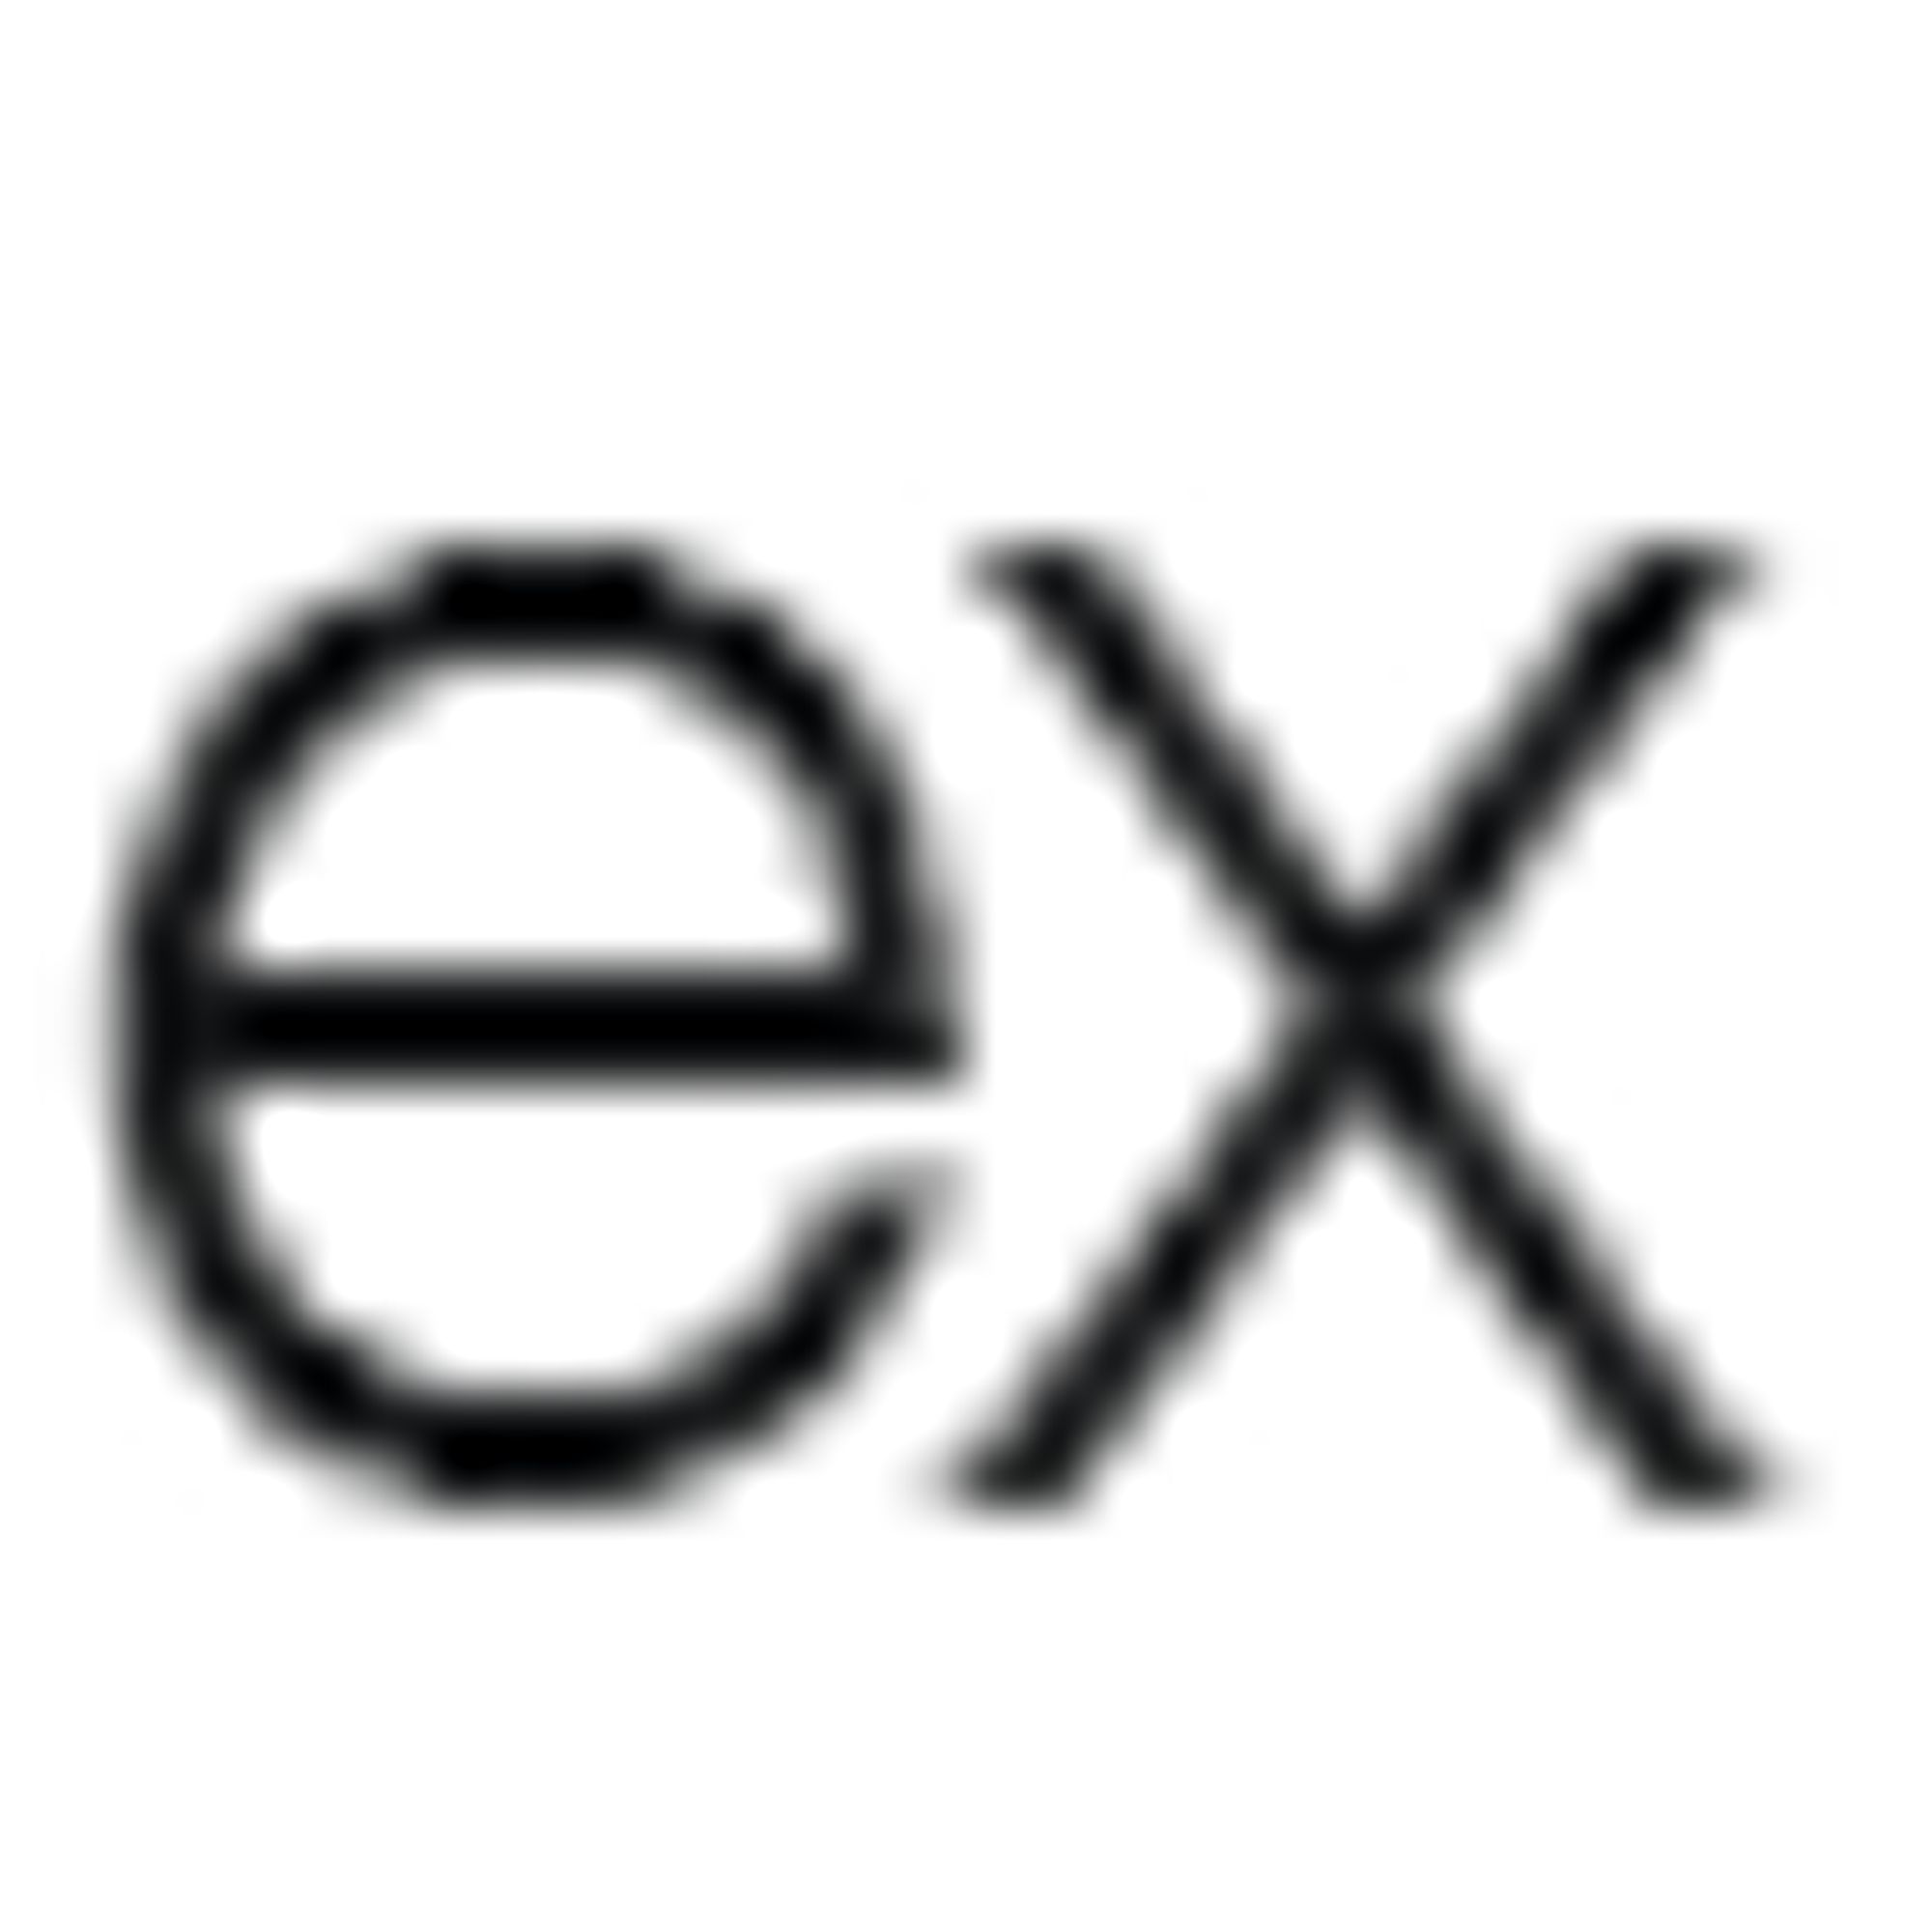 Express - Node.js Web 应用程序框架 - Express 中文文档 | Express 中文网